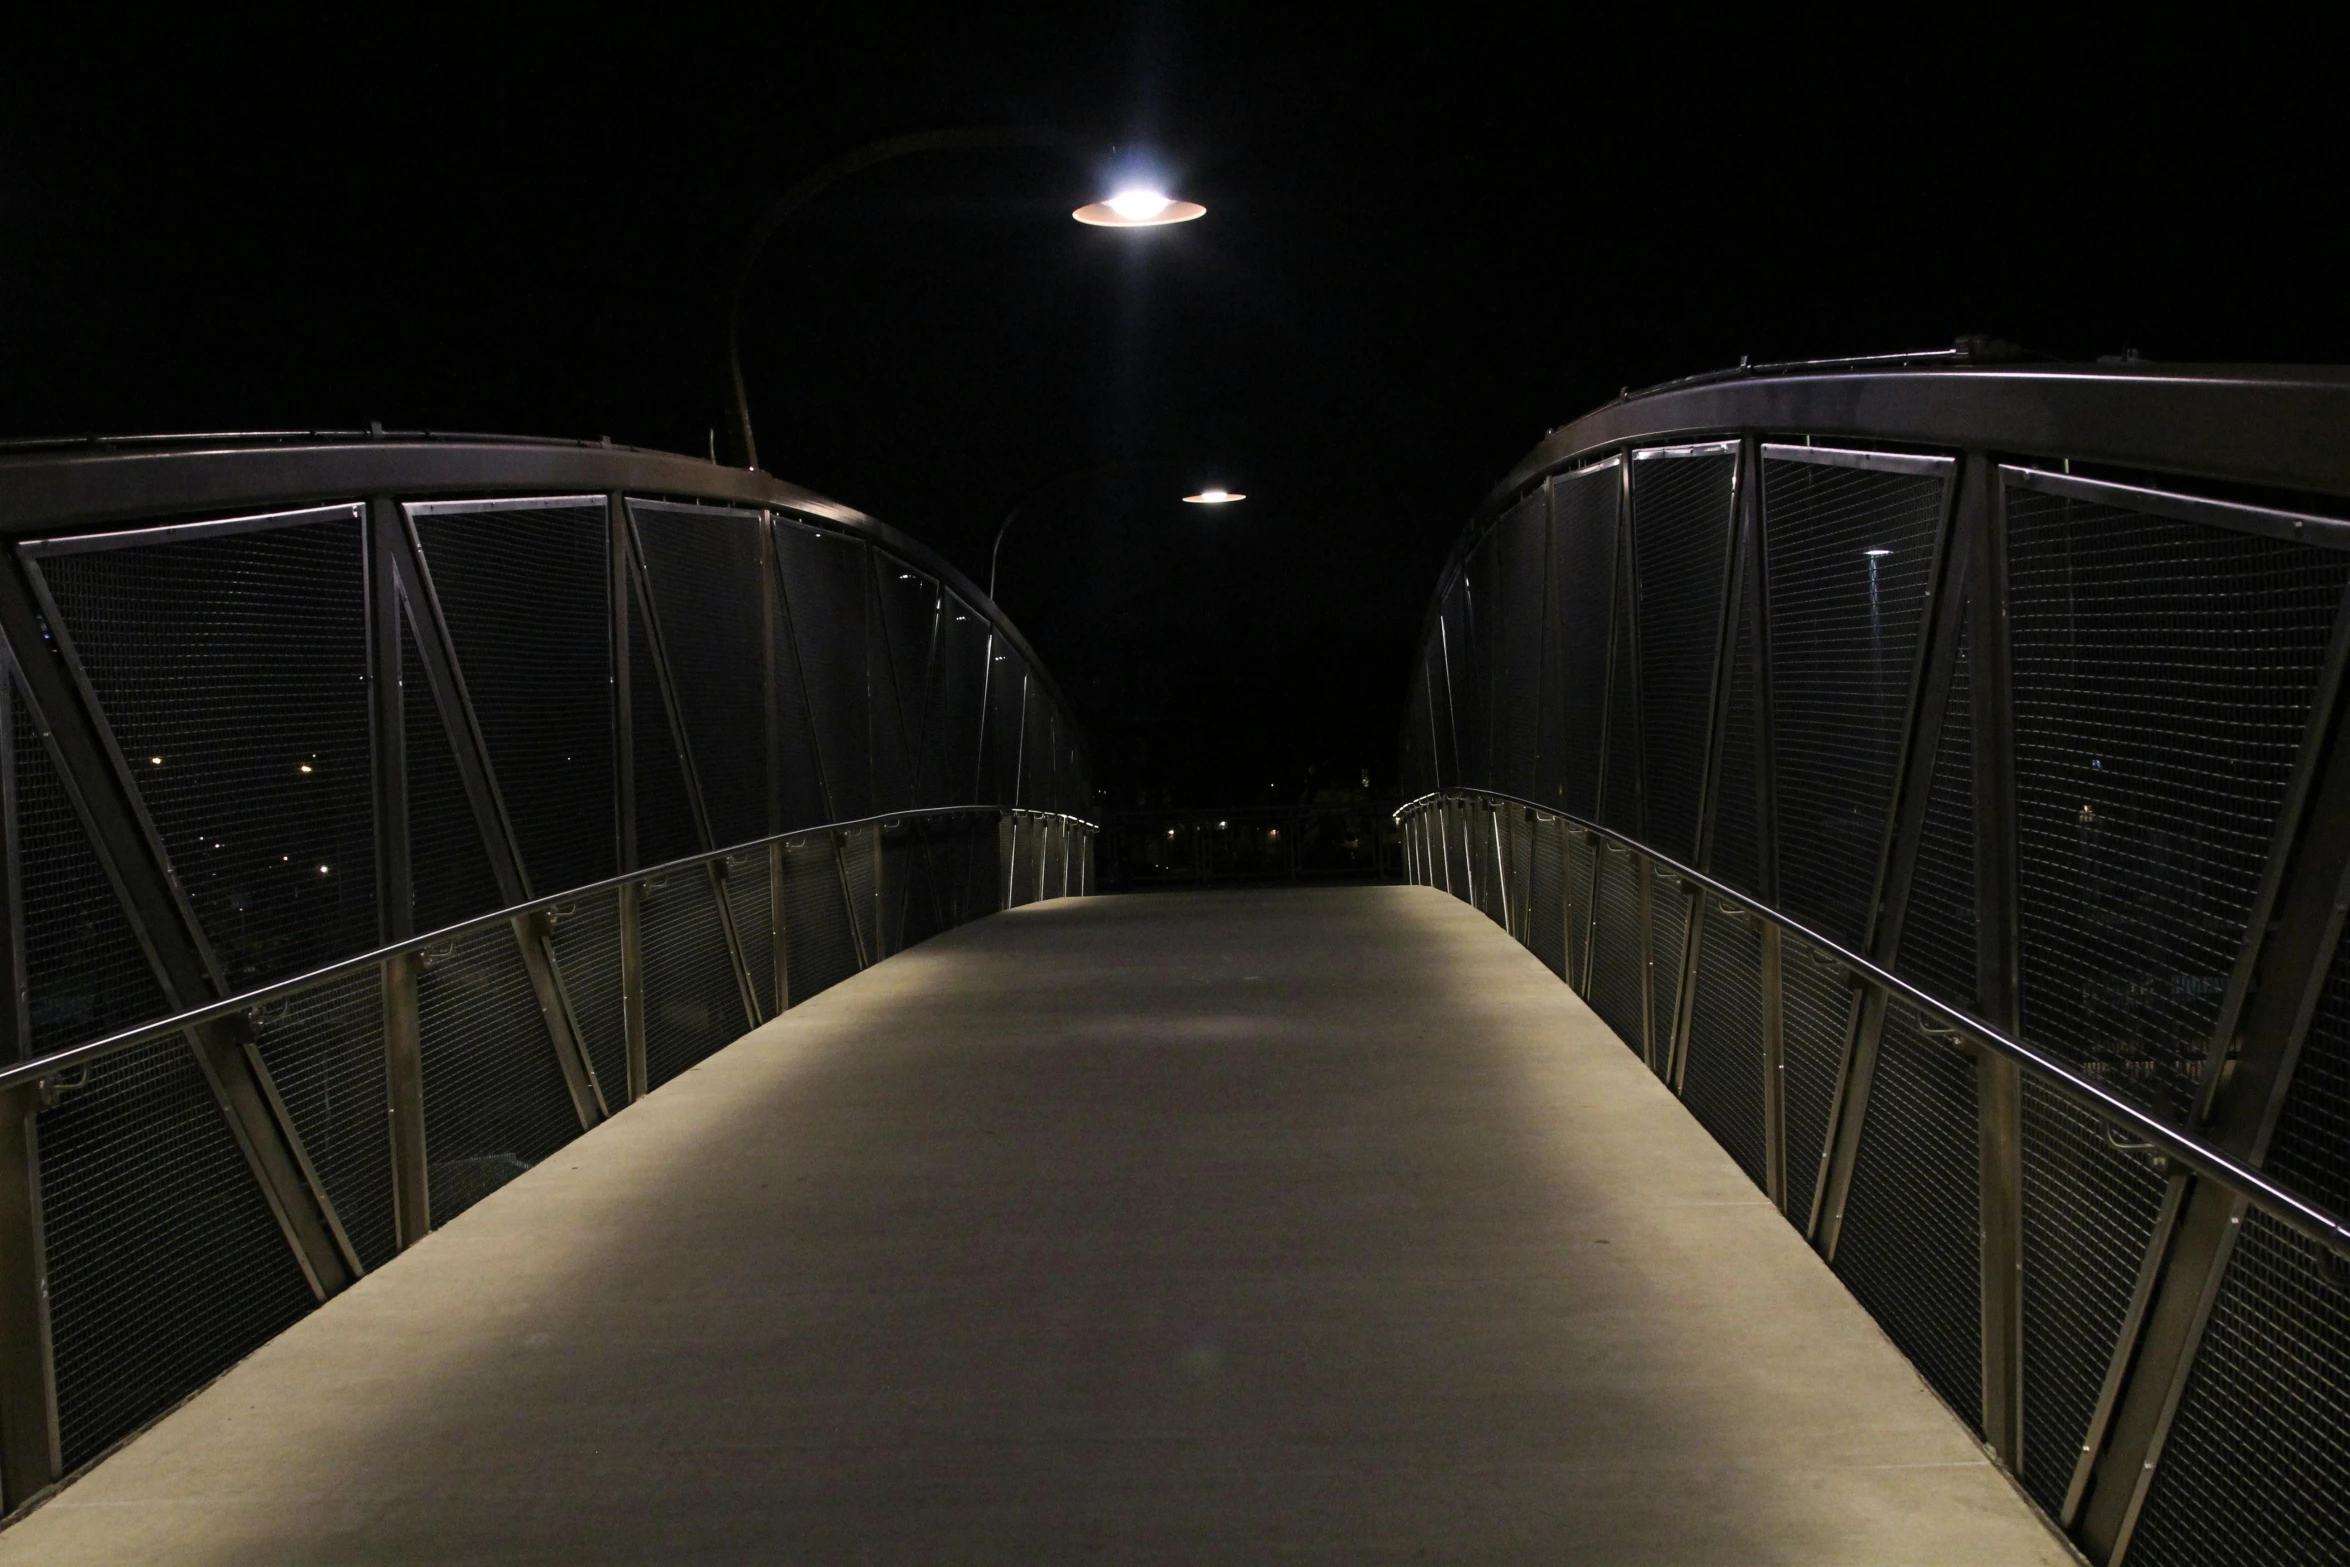 a person walking across a bridge at night, award winning lighting, calm lighting, overhead lighting, it's dark